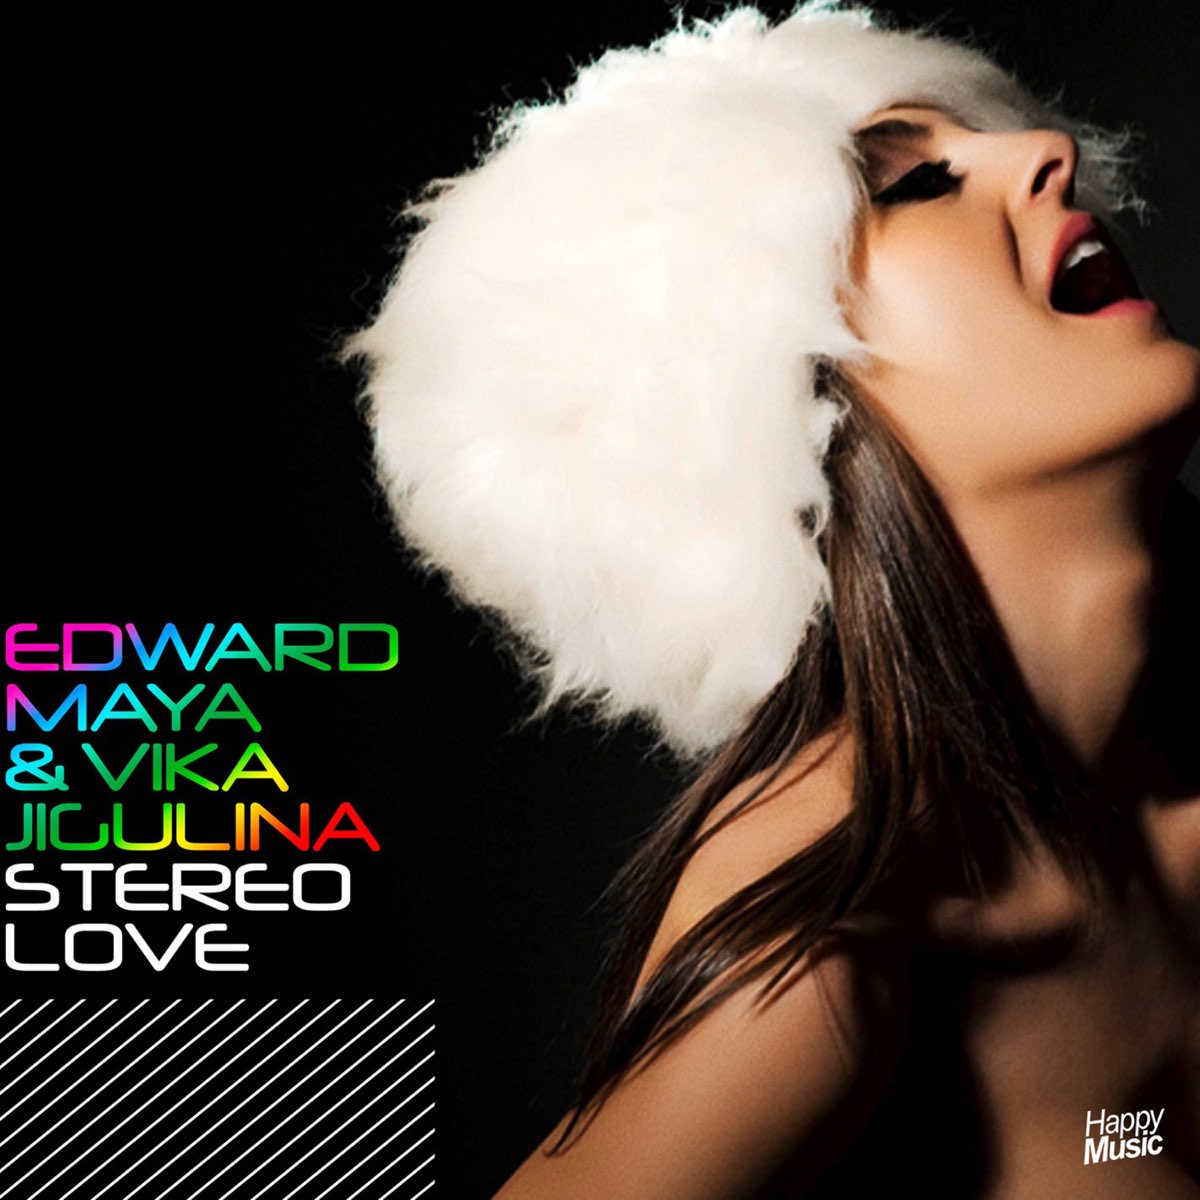 Эстрада ремикс. Edward Maya & Vika Jigulina stereo Love обложка. Vika Jigulina stereo Love.